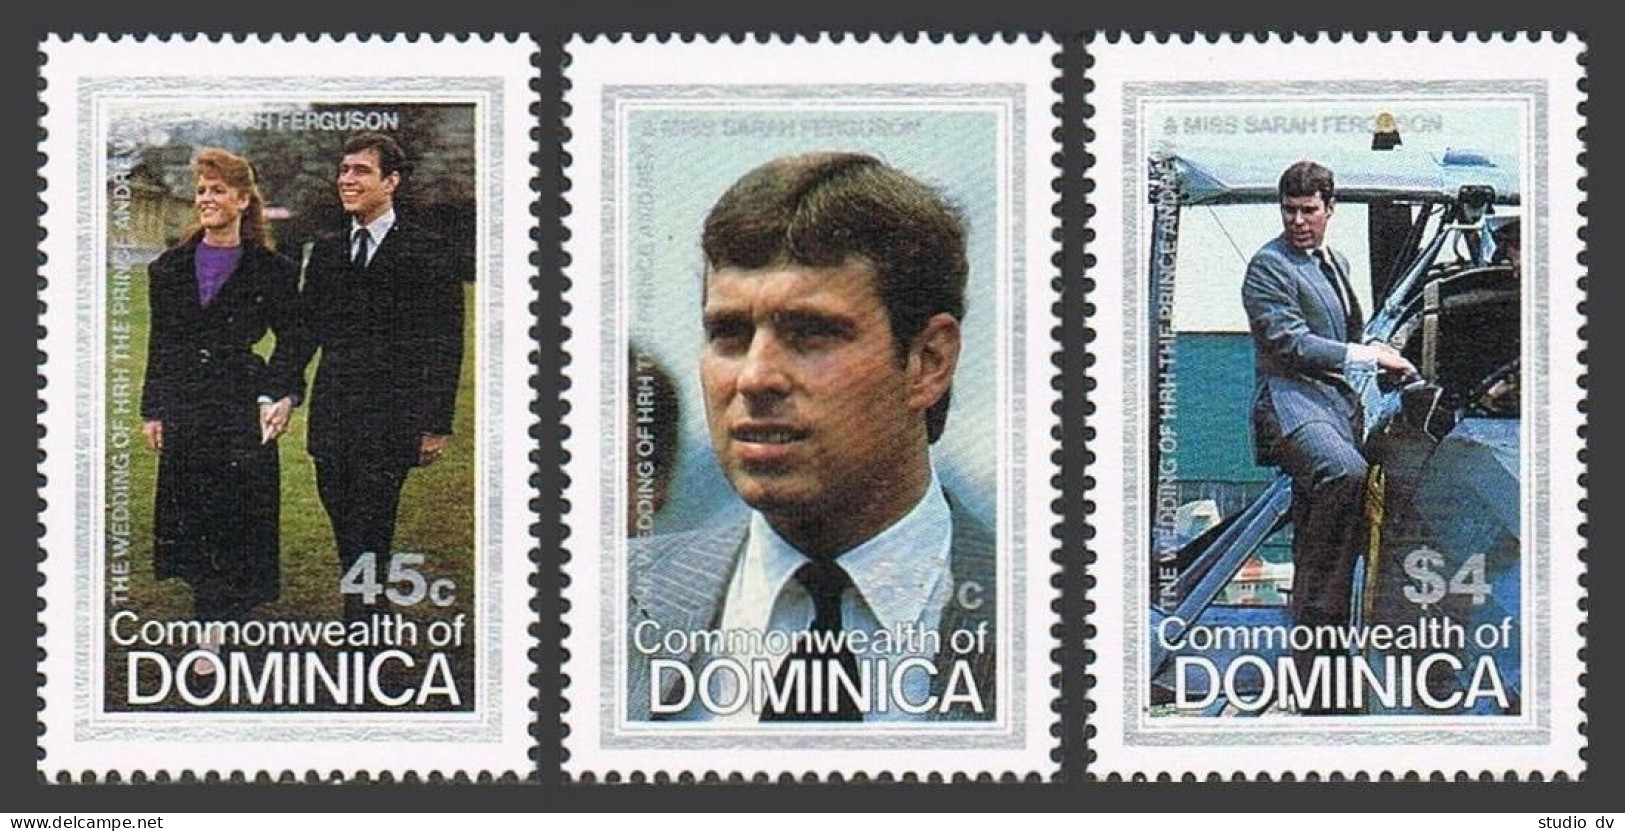 Dominica 970-972,MNH.Michel 984-986. Royal Wedding 1986:Andrew,Sarah Ferguson. - Dominica (1978-...)